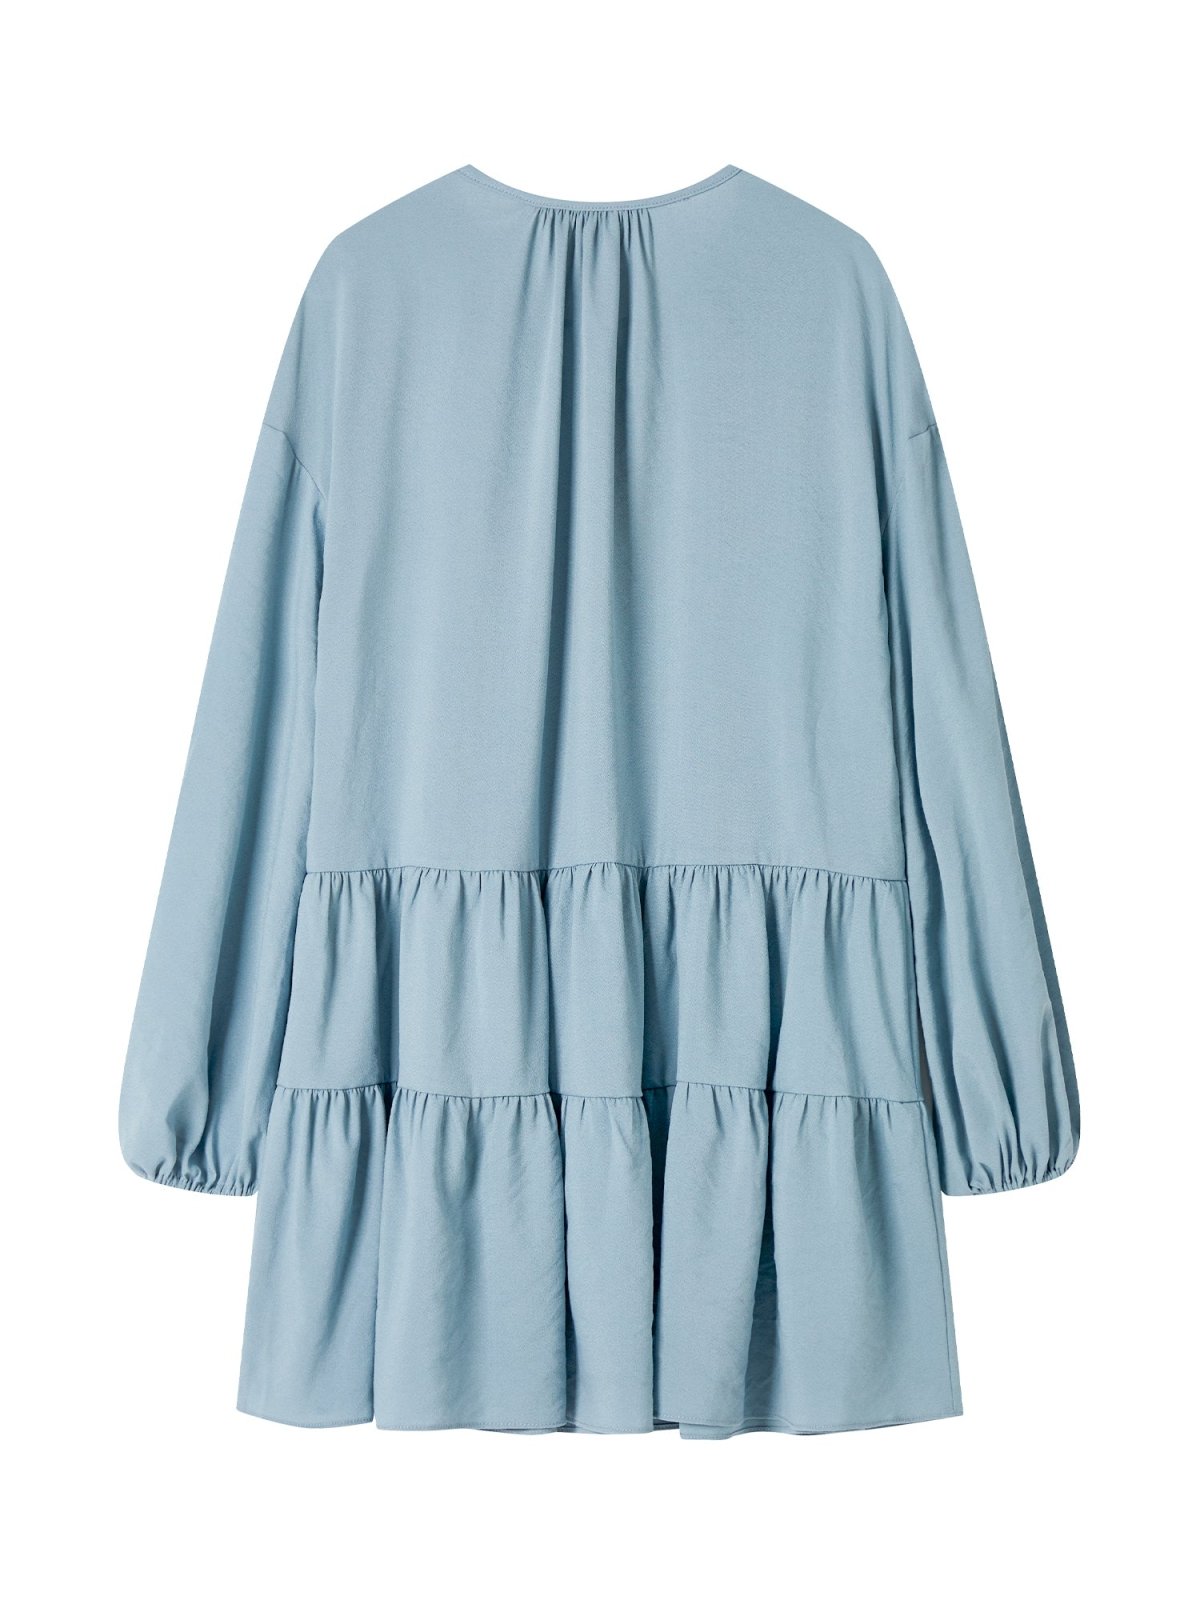 Blouson Sleeve Mini Dress CLOUD - DAG-DD8724-21CloudS - Baby Blue - S - D'ZAGE Designs